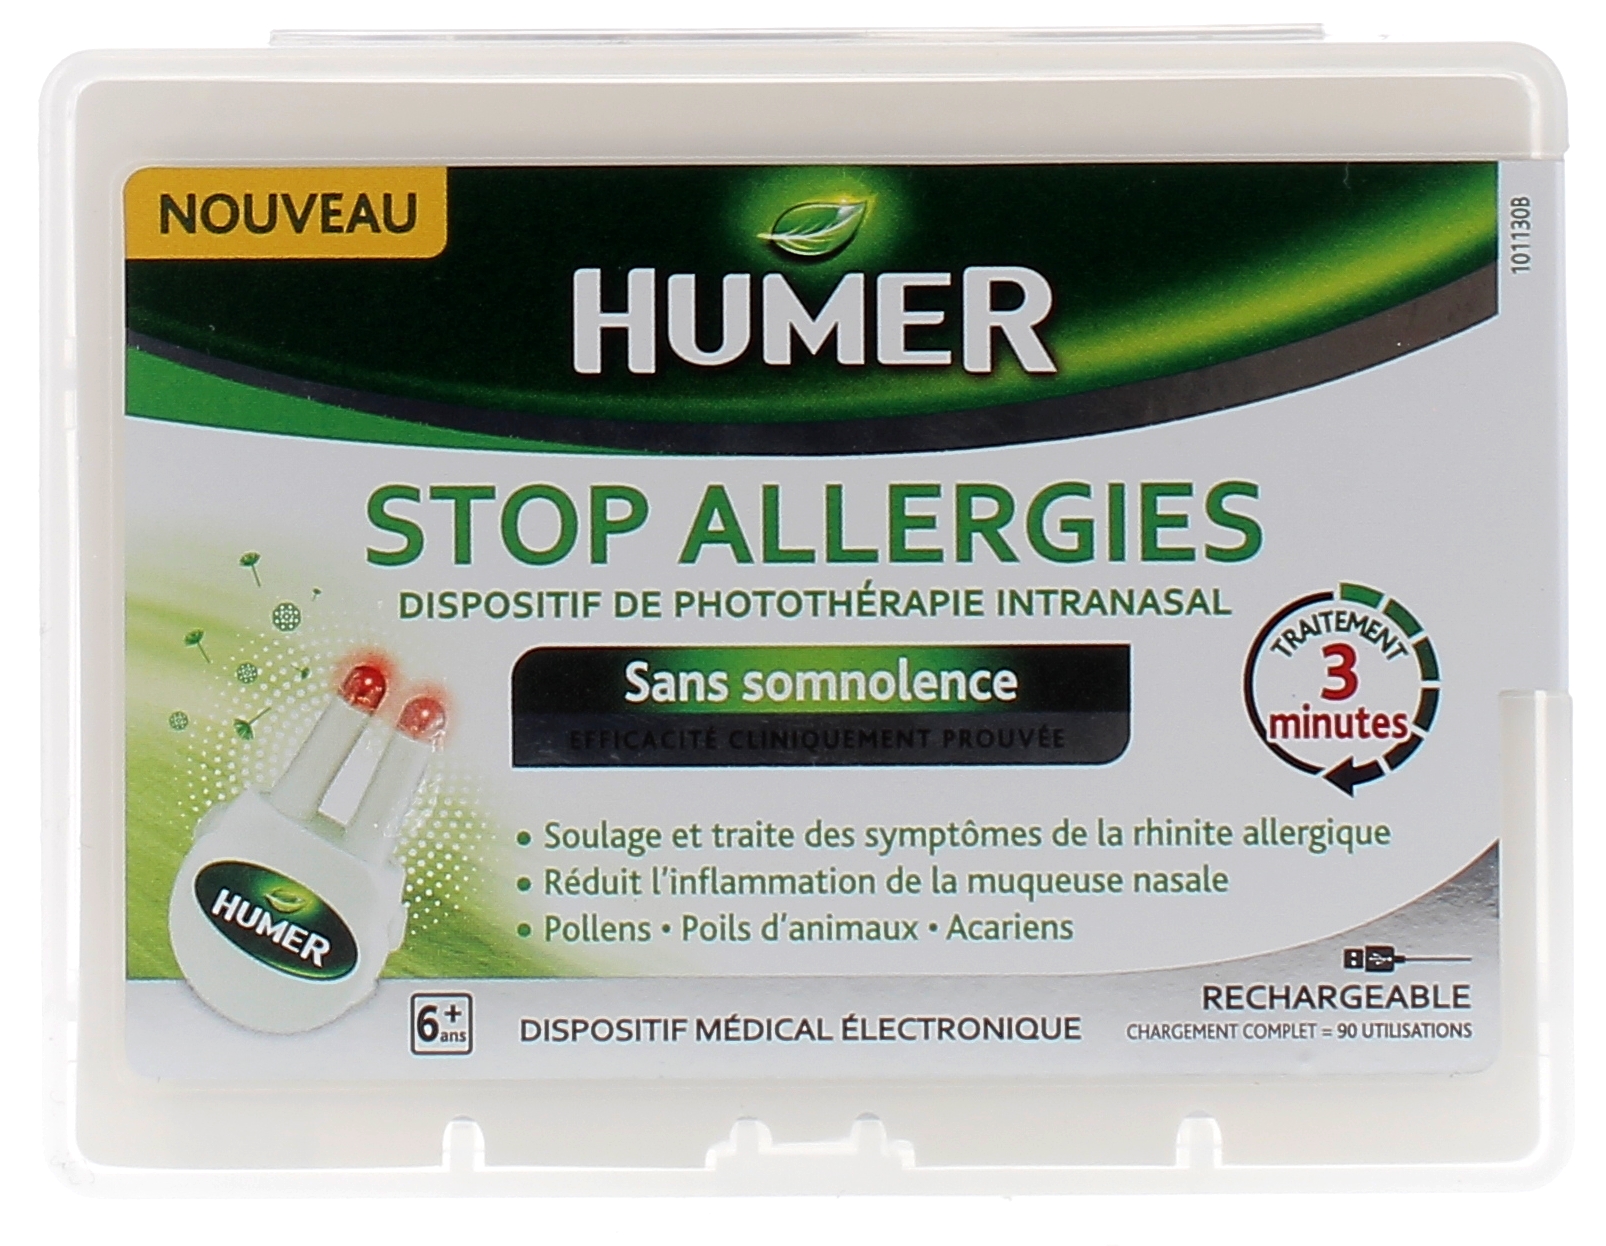 Stop allergies dispositif de photothérapie intranasal Humer - 1